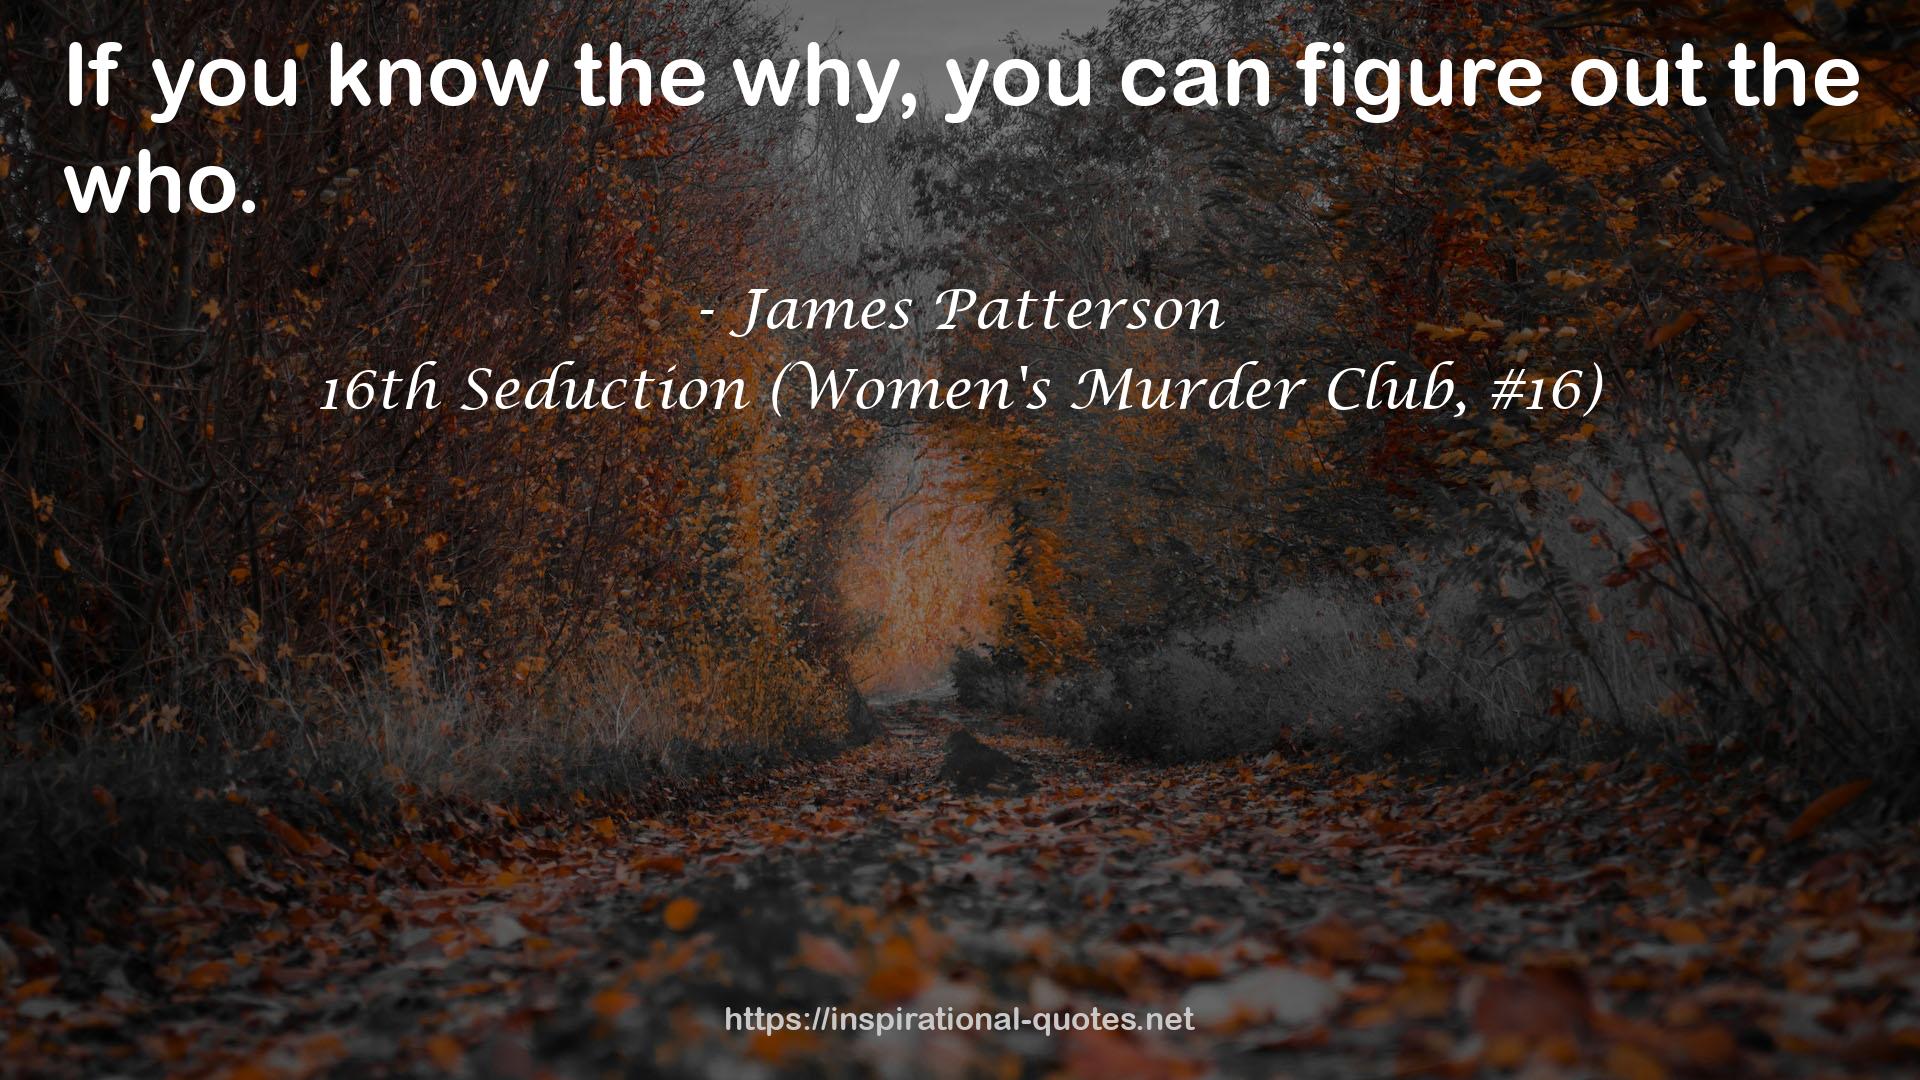 16th Seduction (Women's Murder Club, #16) QUOTES